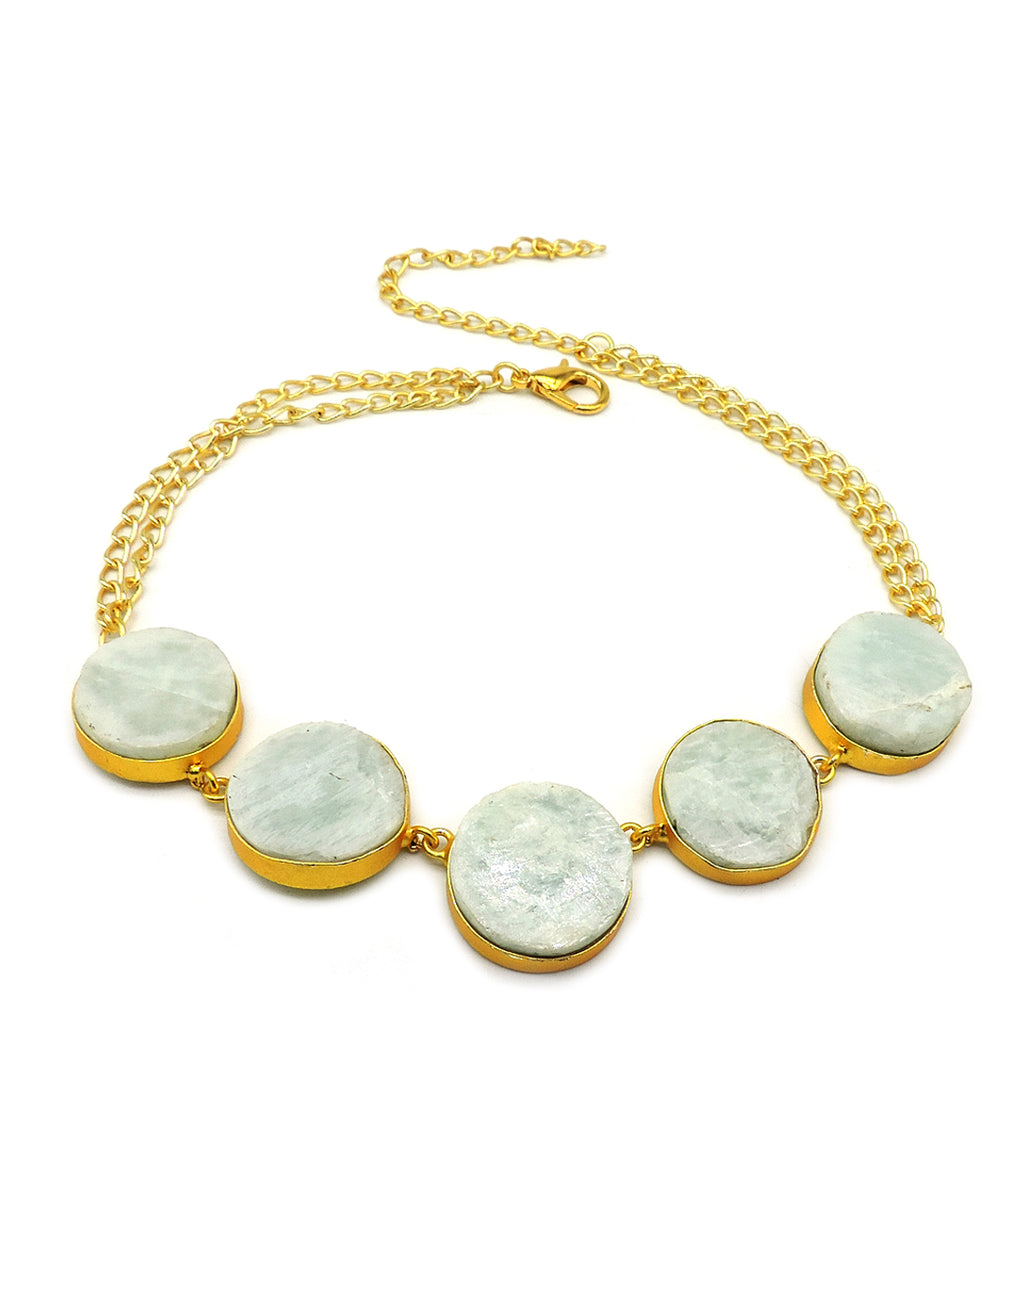 Round Amazonite Choker - Statement Necklaces - Gold-Plated & Hypoallergenic Jewellery - Made in India - Dubai Jewellery - Dori